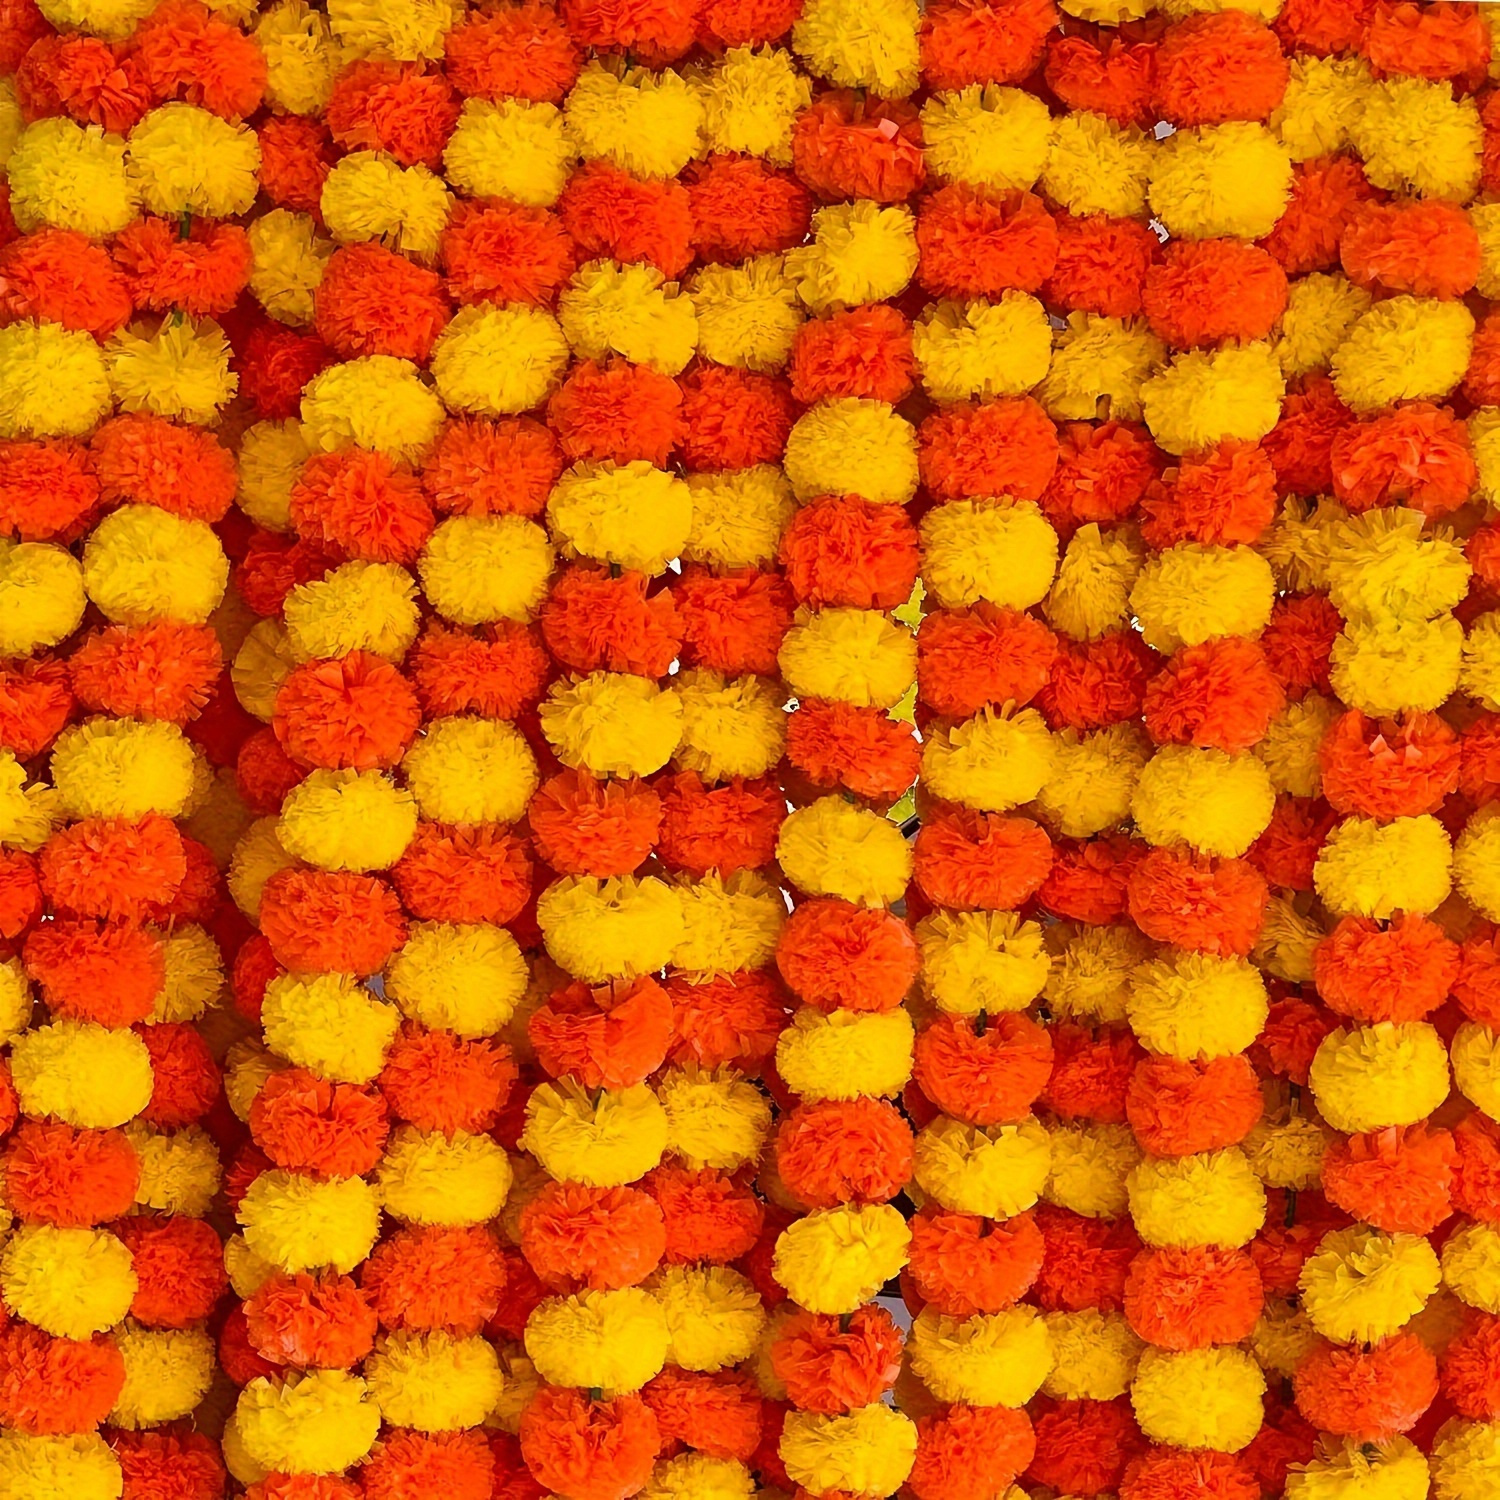 

4pcs Marigold Faux Garland - Perfect For Wedding, Diwali & Spring Decorations, Yellow & Dark Orange, No Power Needed